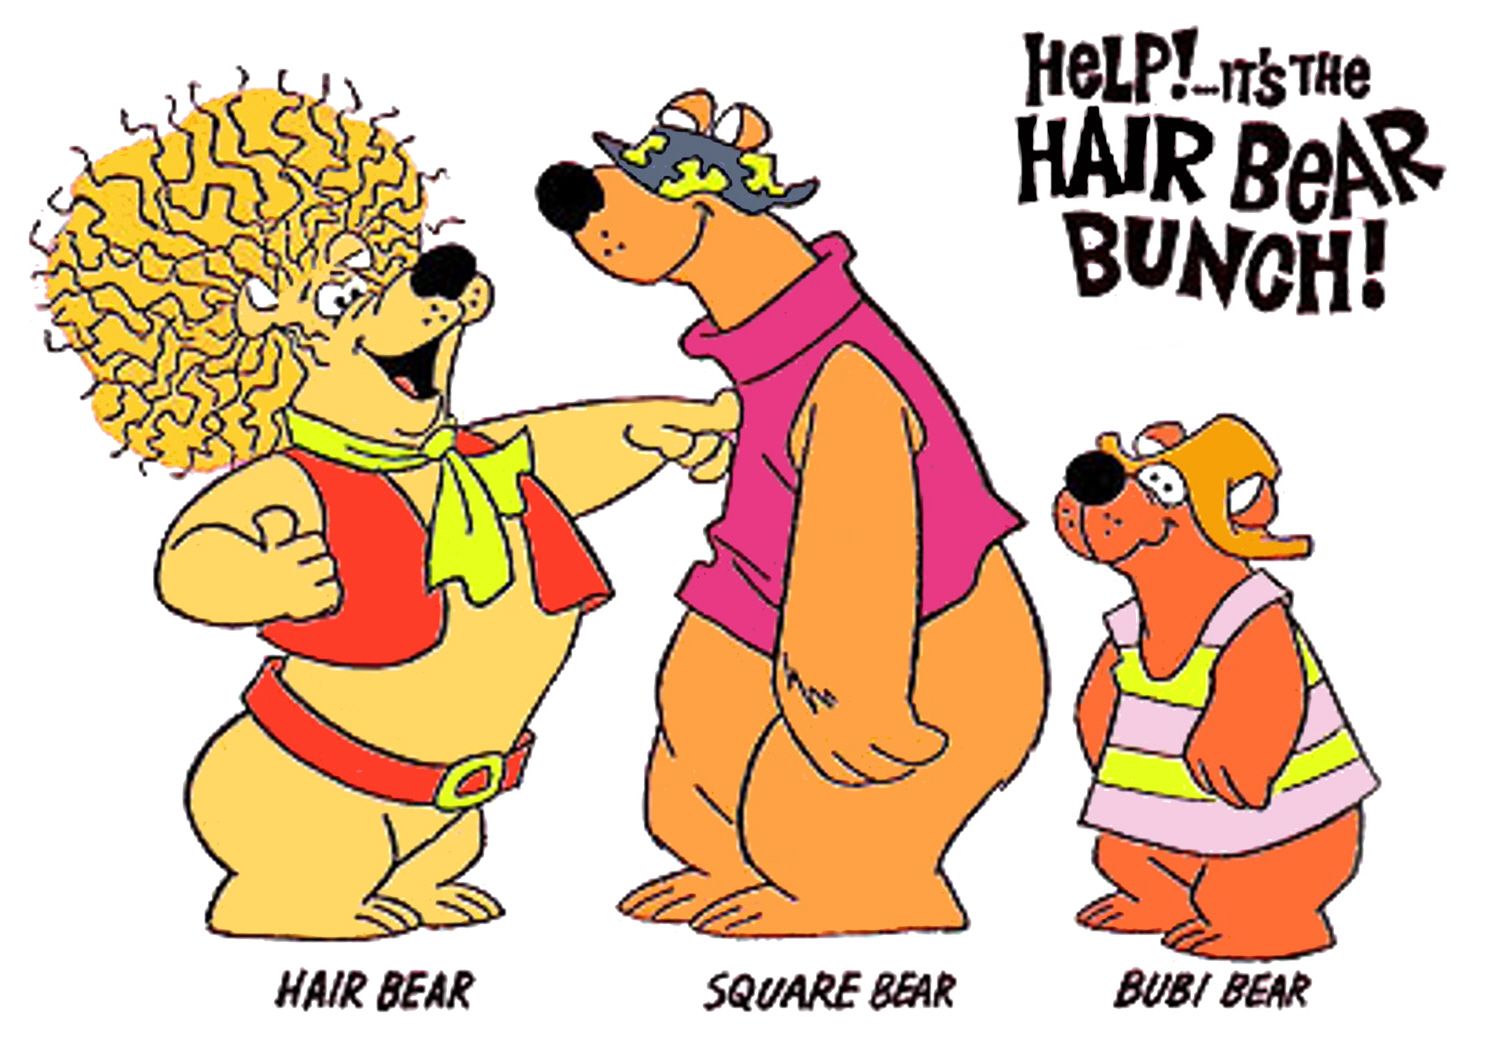 Hair Bear Bunch #3